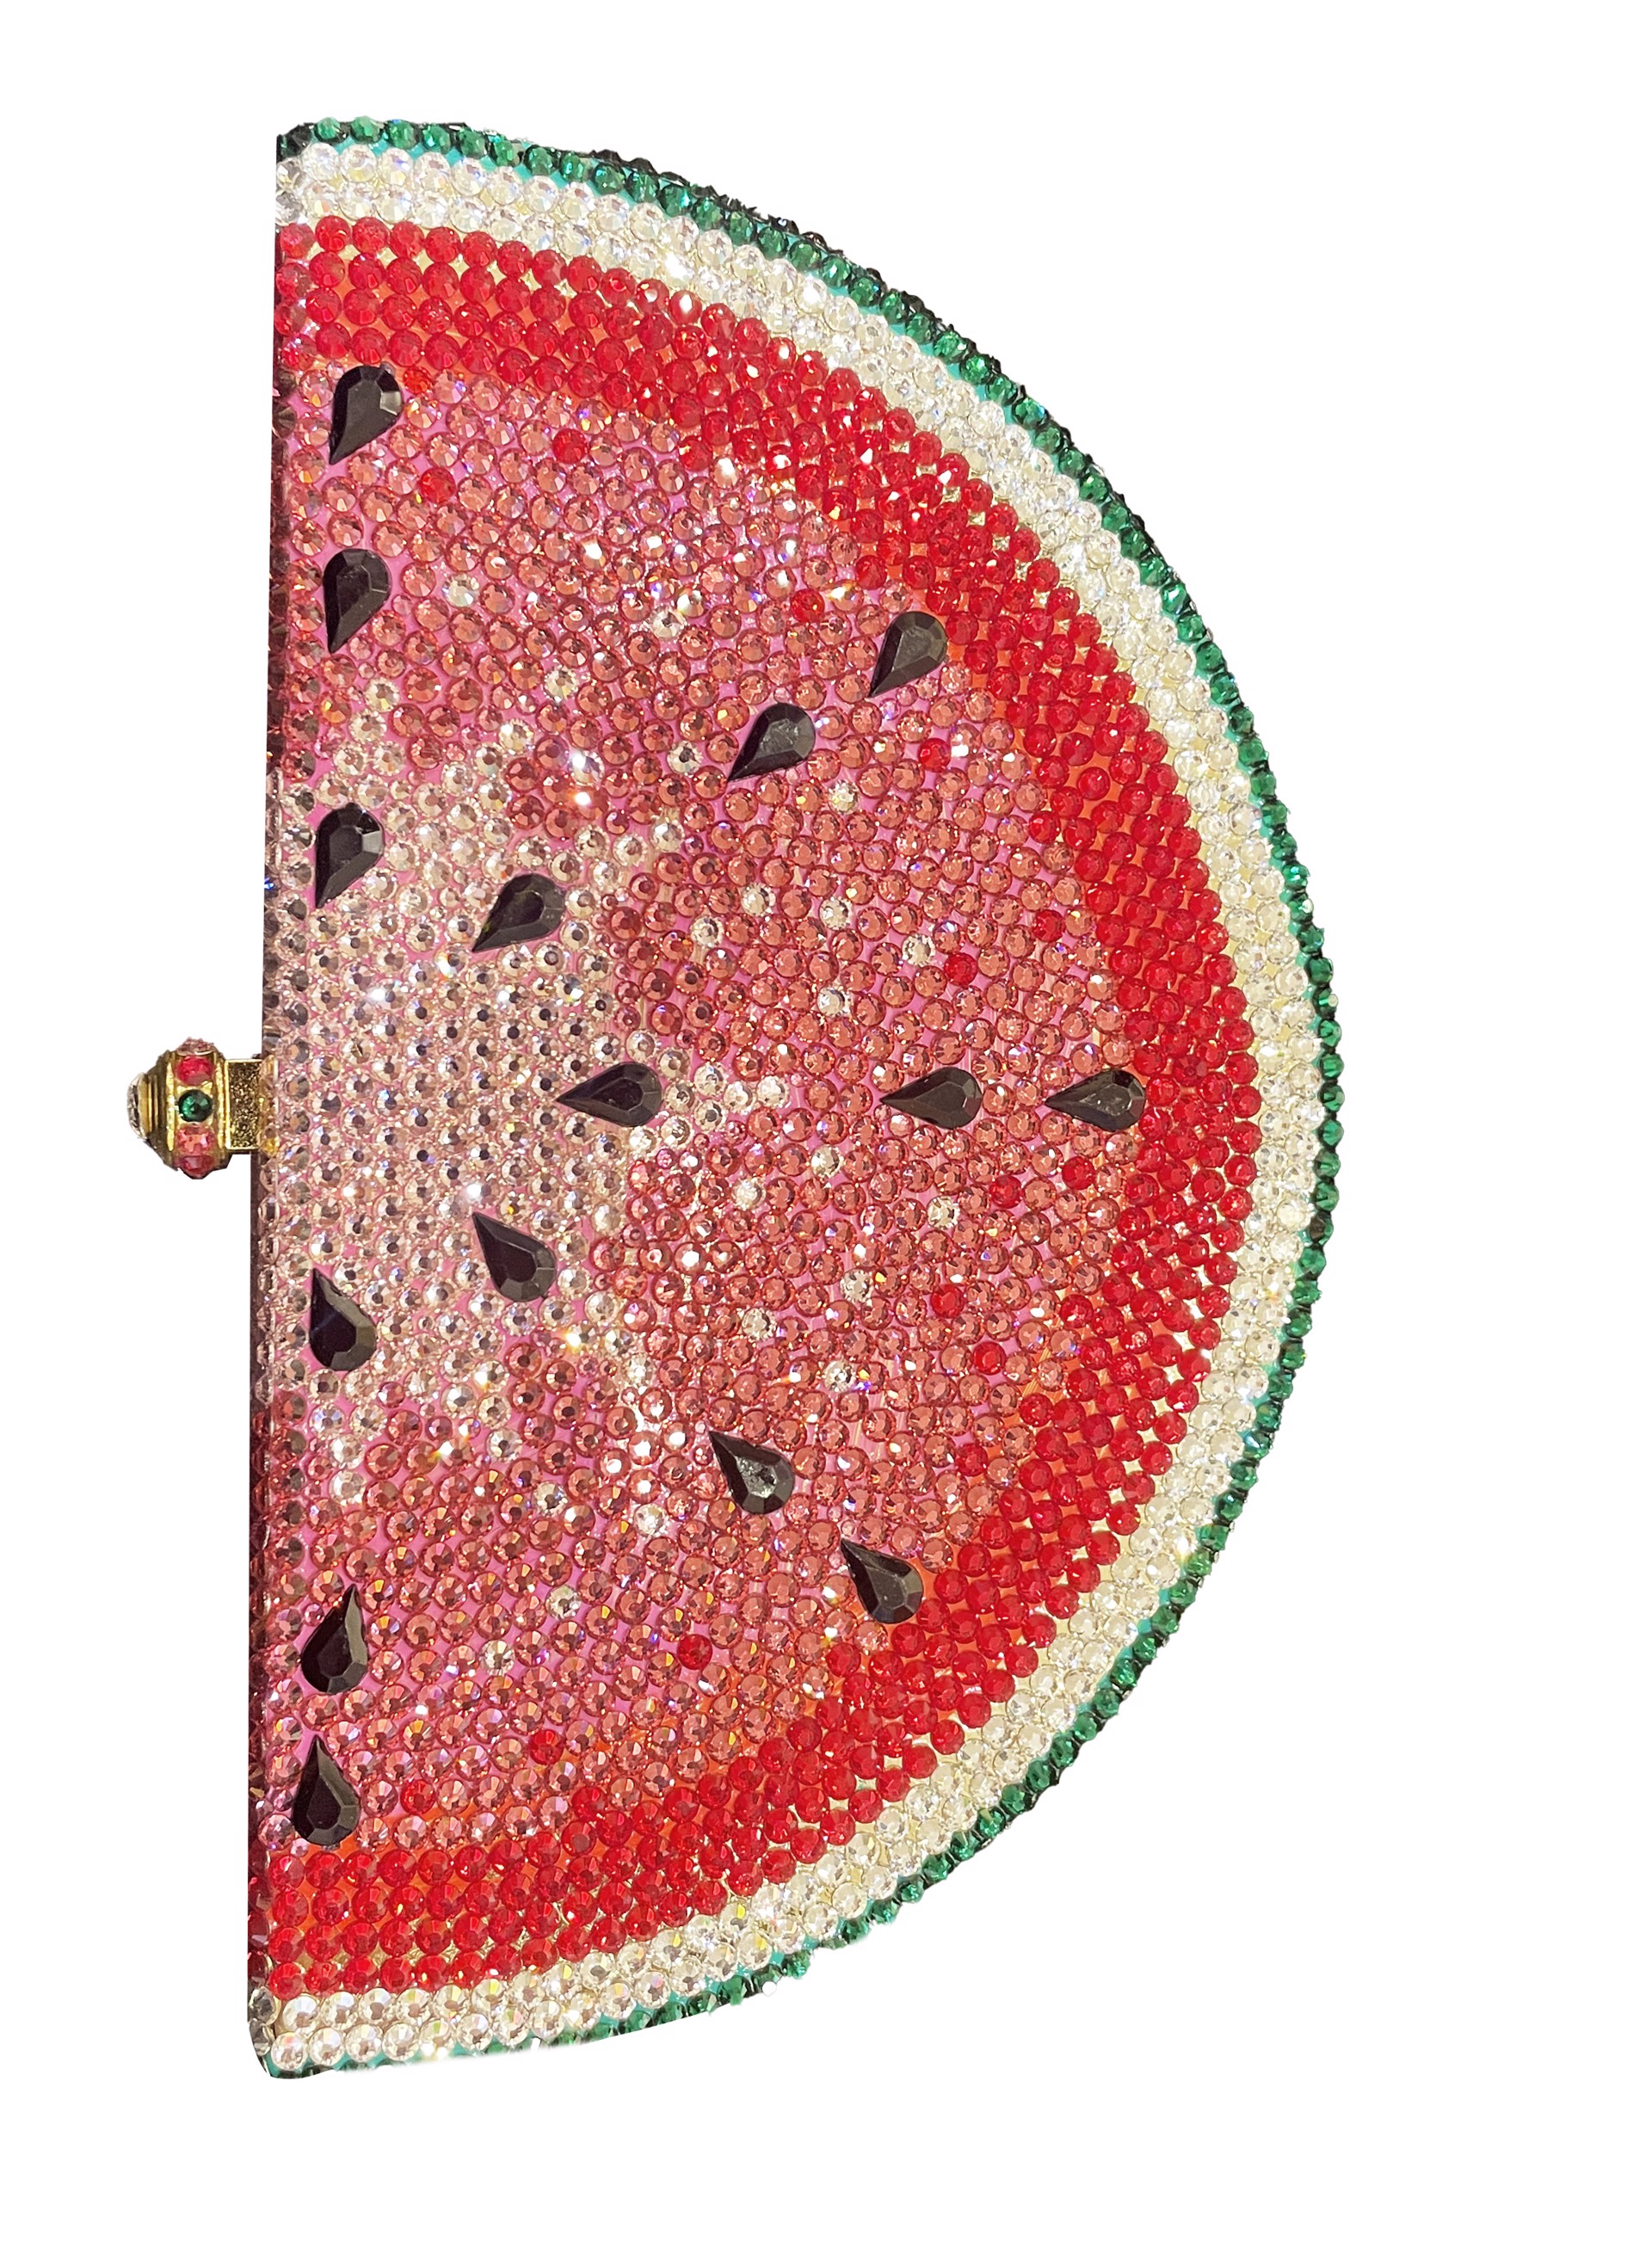 Watermelon Jewel Bag by EBFA Studio